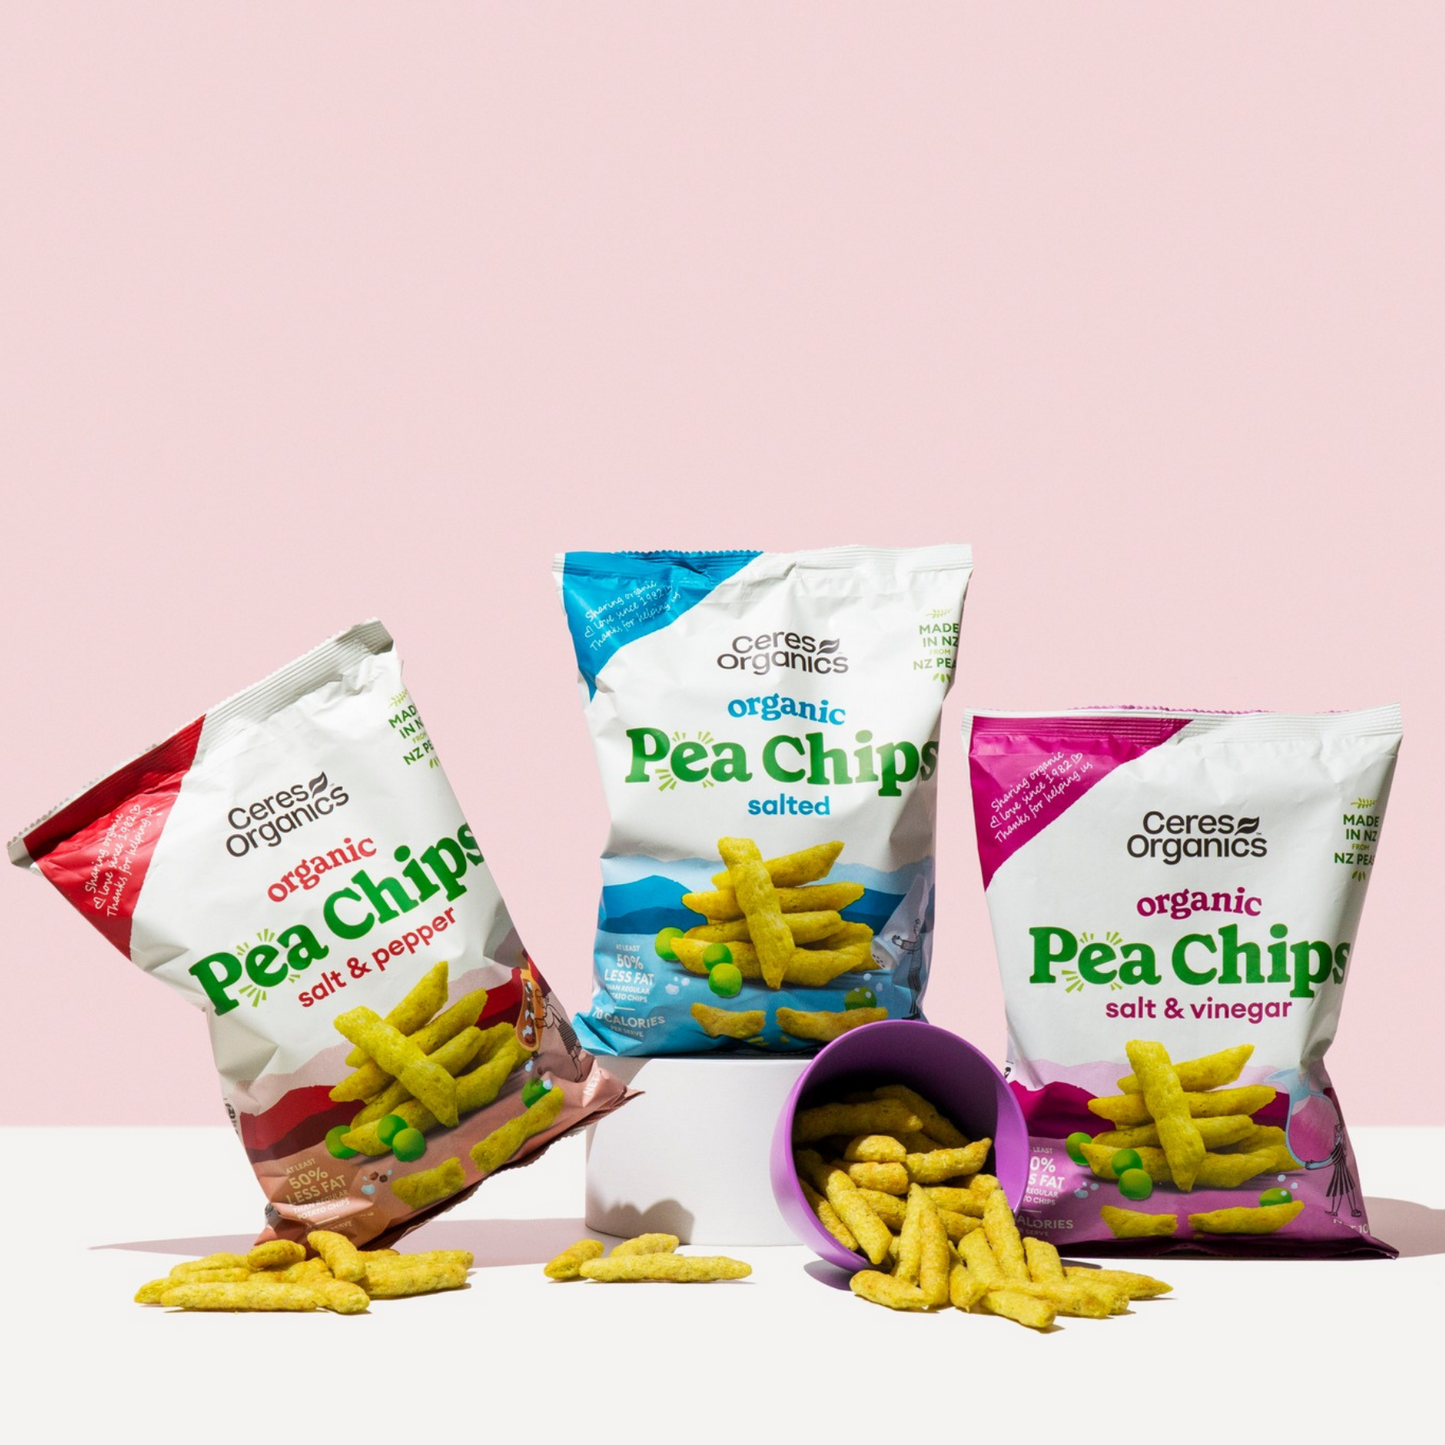 Ceres Organics Pea Chips 100g, Salt & Pepper Flavour